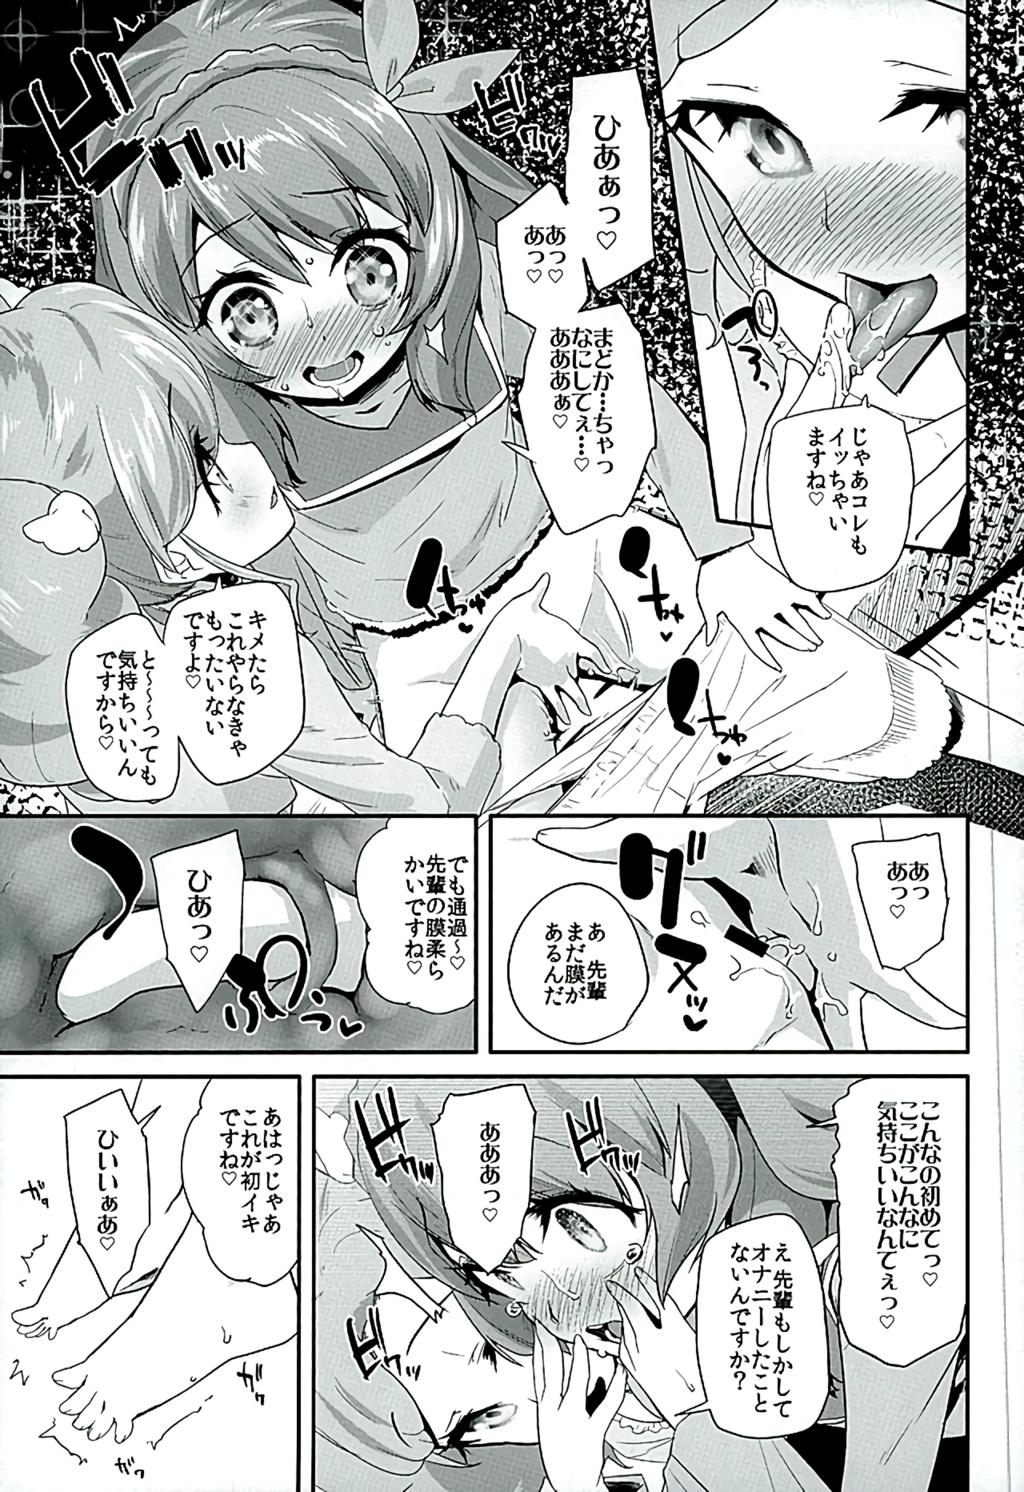 Long Tri Tri Trips! - Aikatsu Deflowered - Page 6